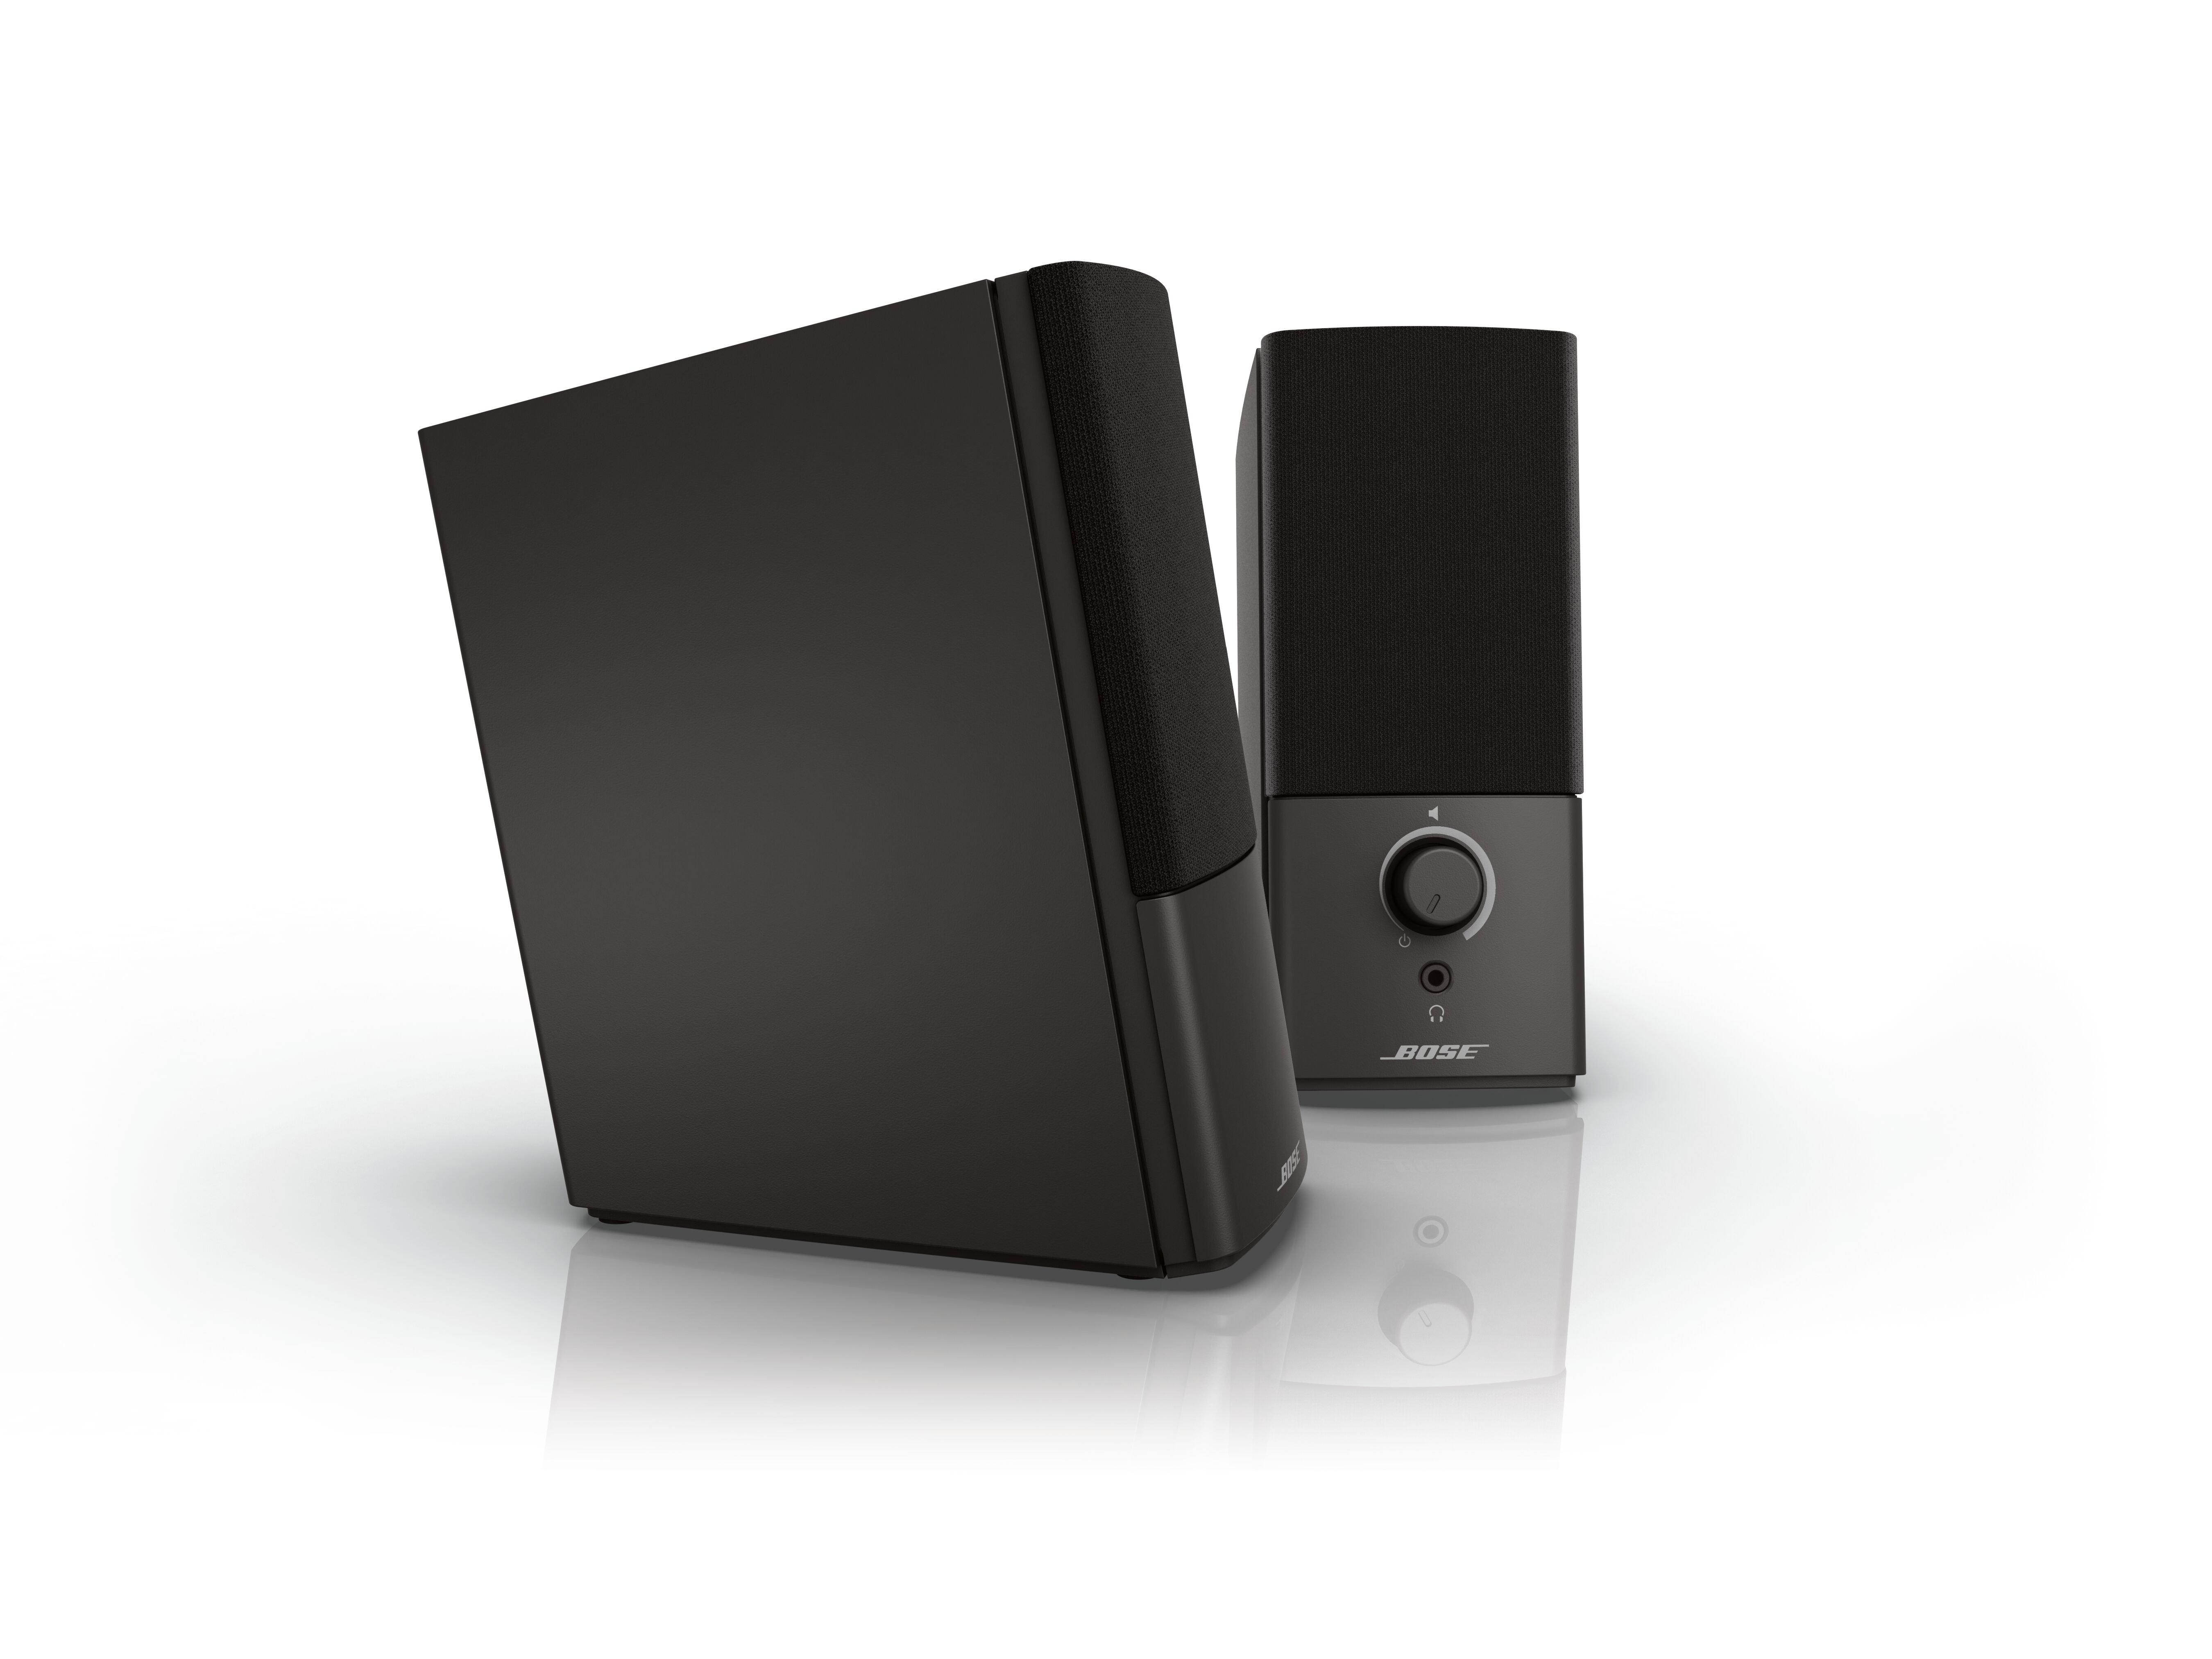 Bose Companion 2 Series III Multimedia Speaker System, Black